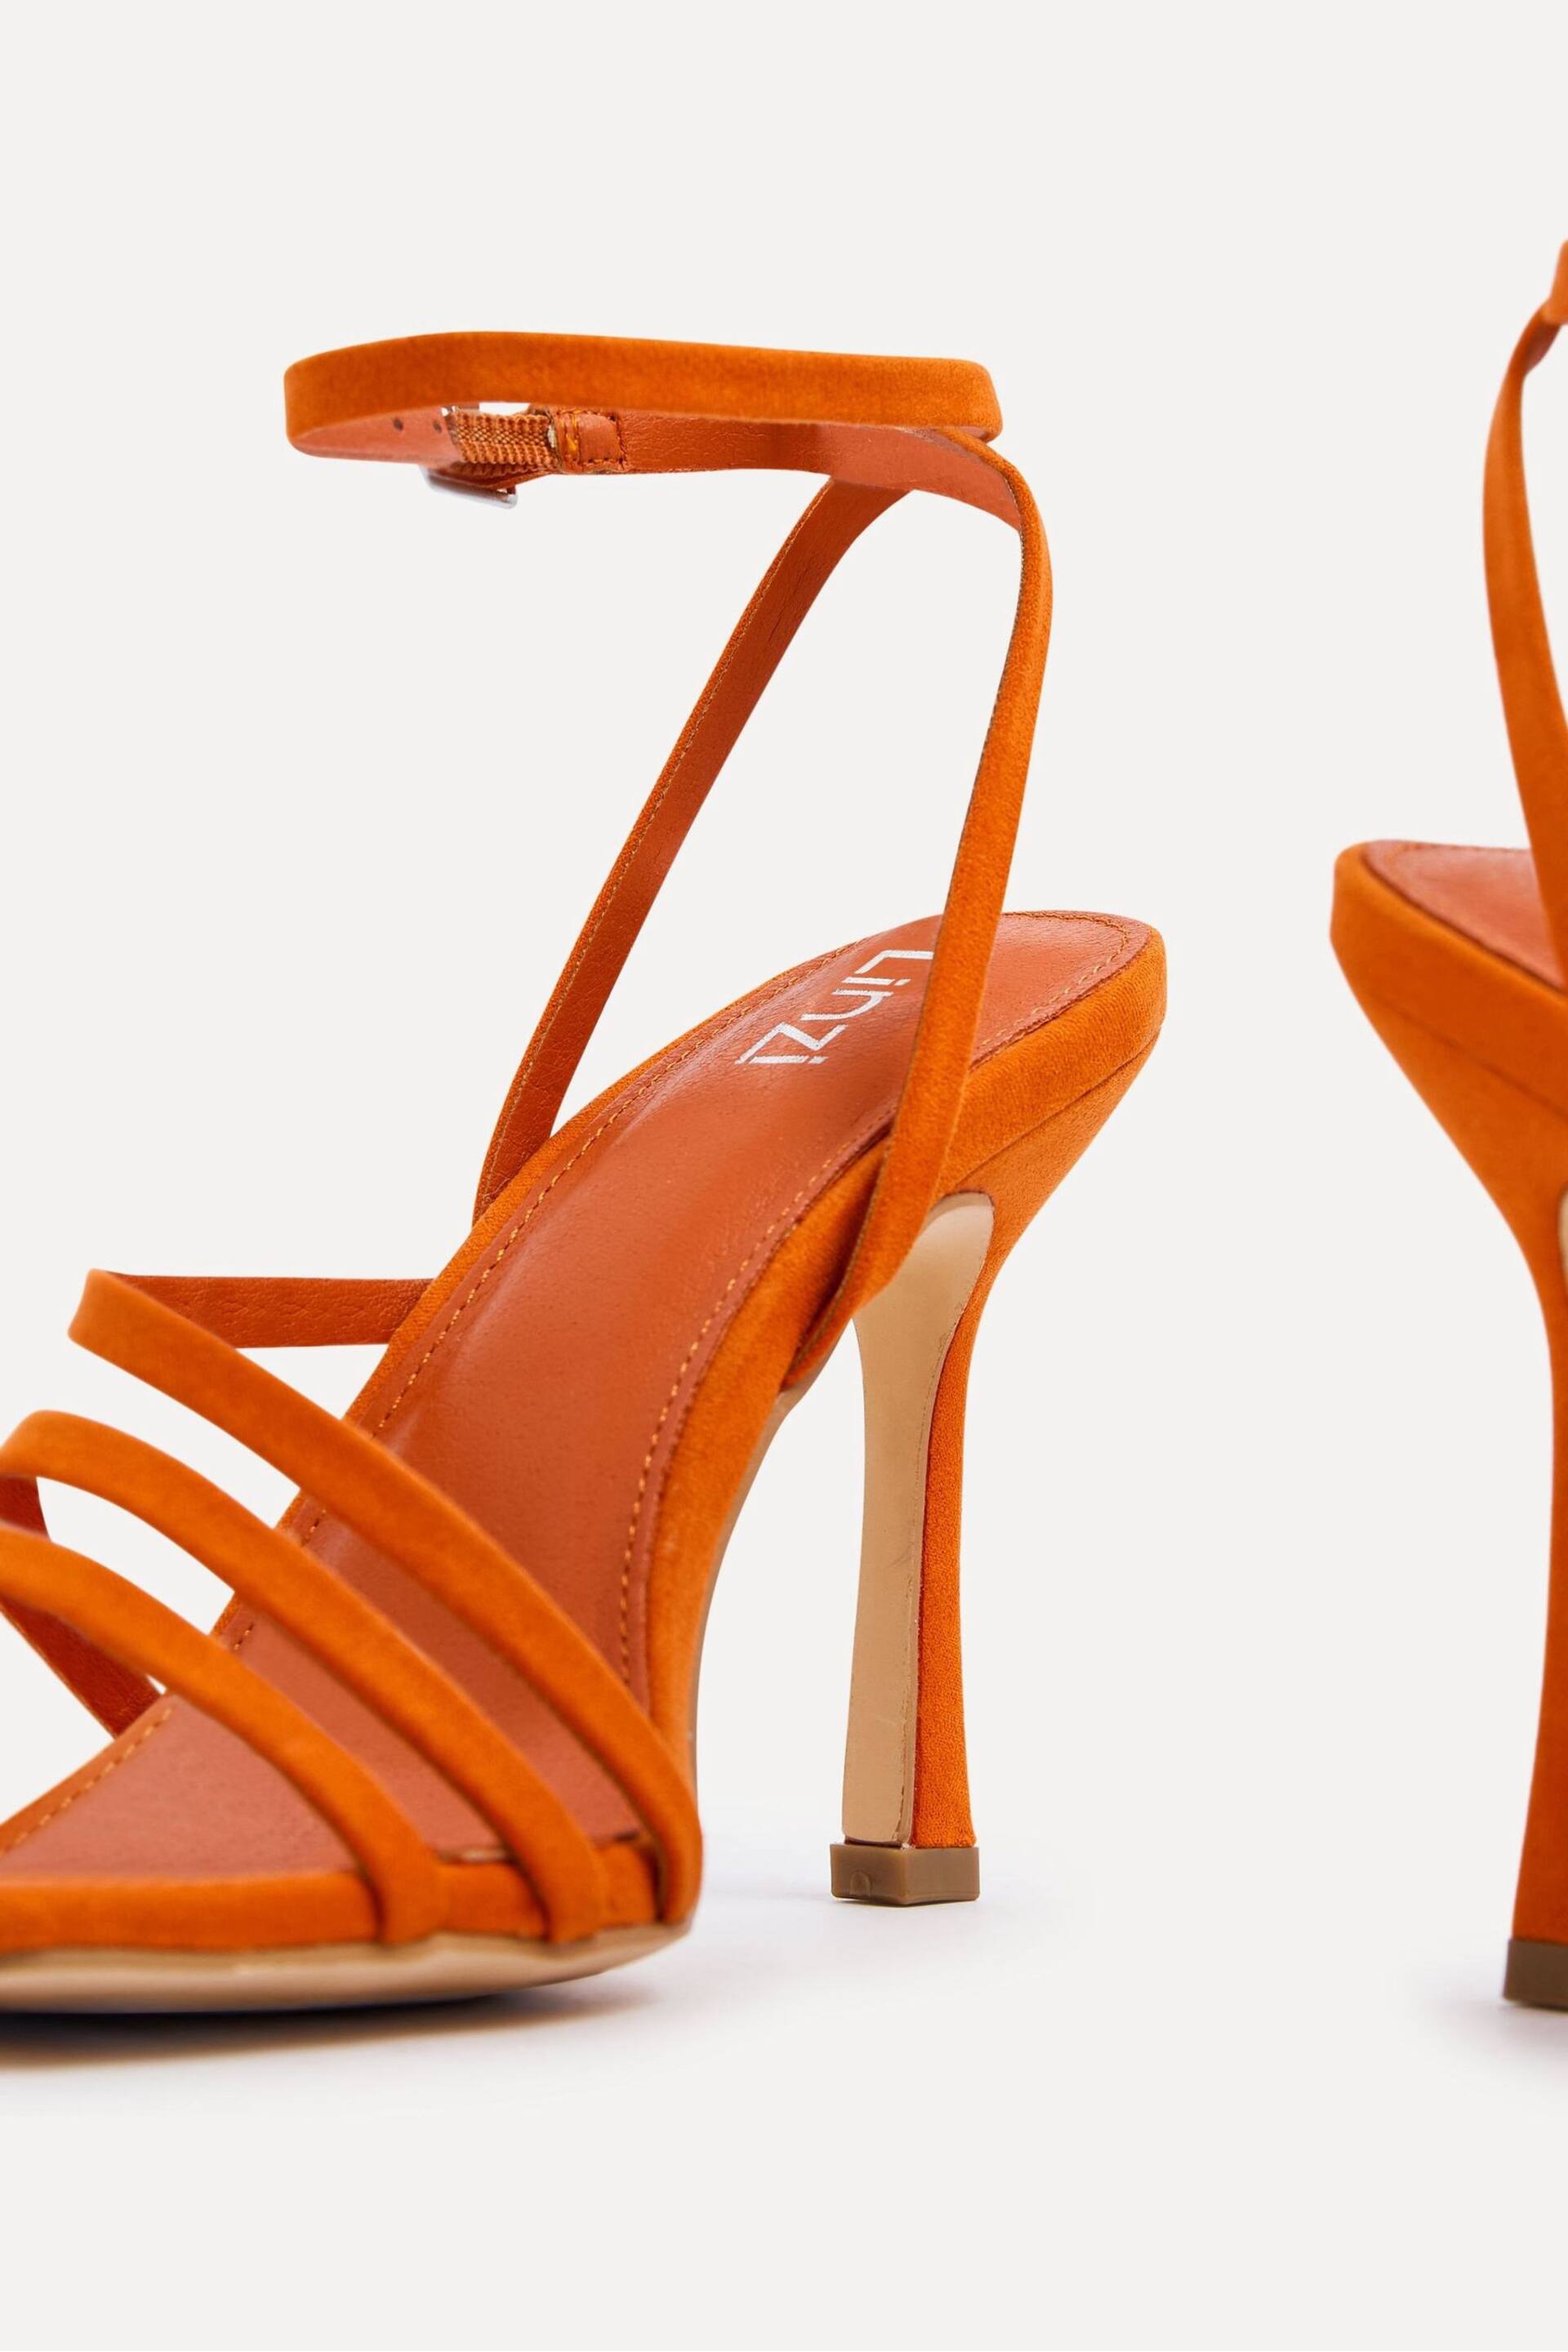 Linzi Orange Scarlett Strappy Heel Sandals With Ankle Strap - Image 5 of 5